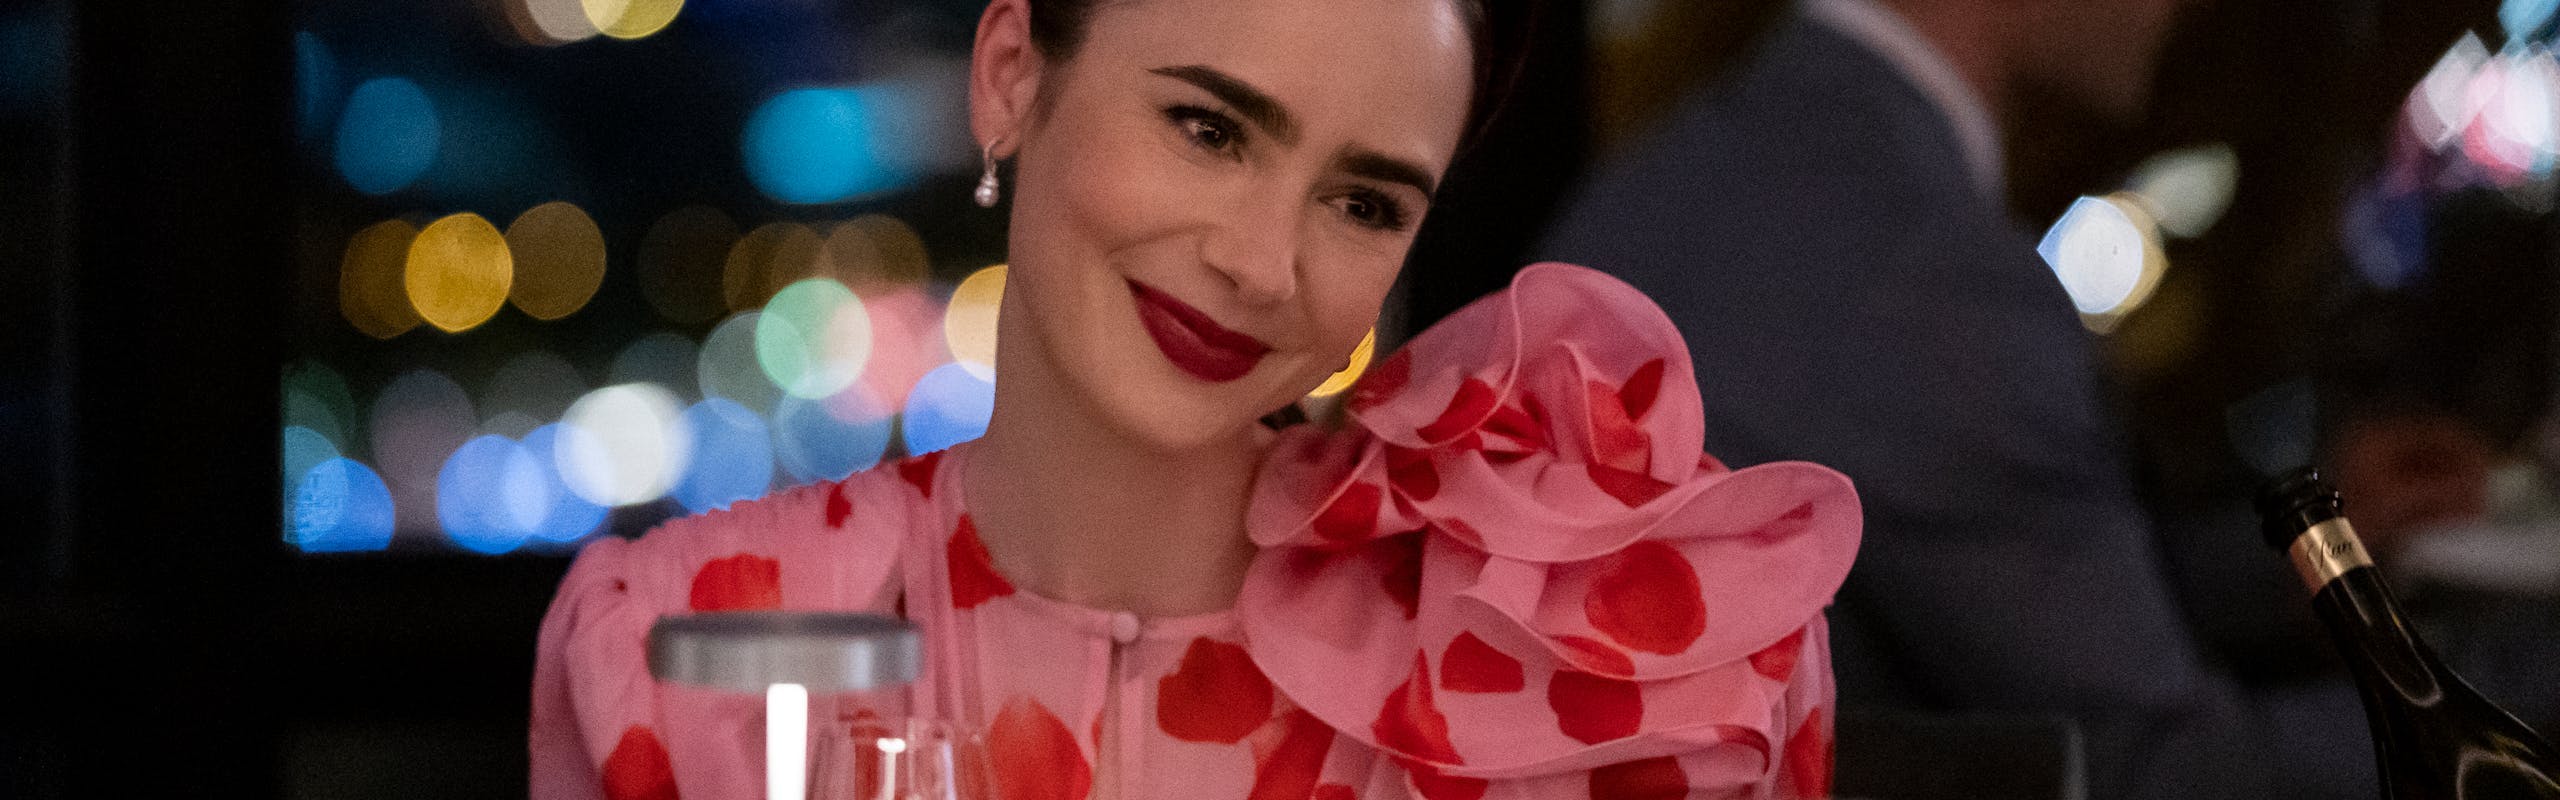 woman in pink polka dot dress at restaurant